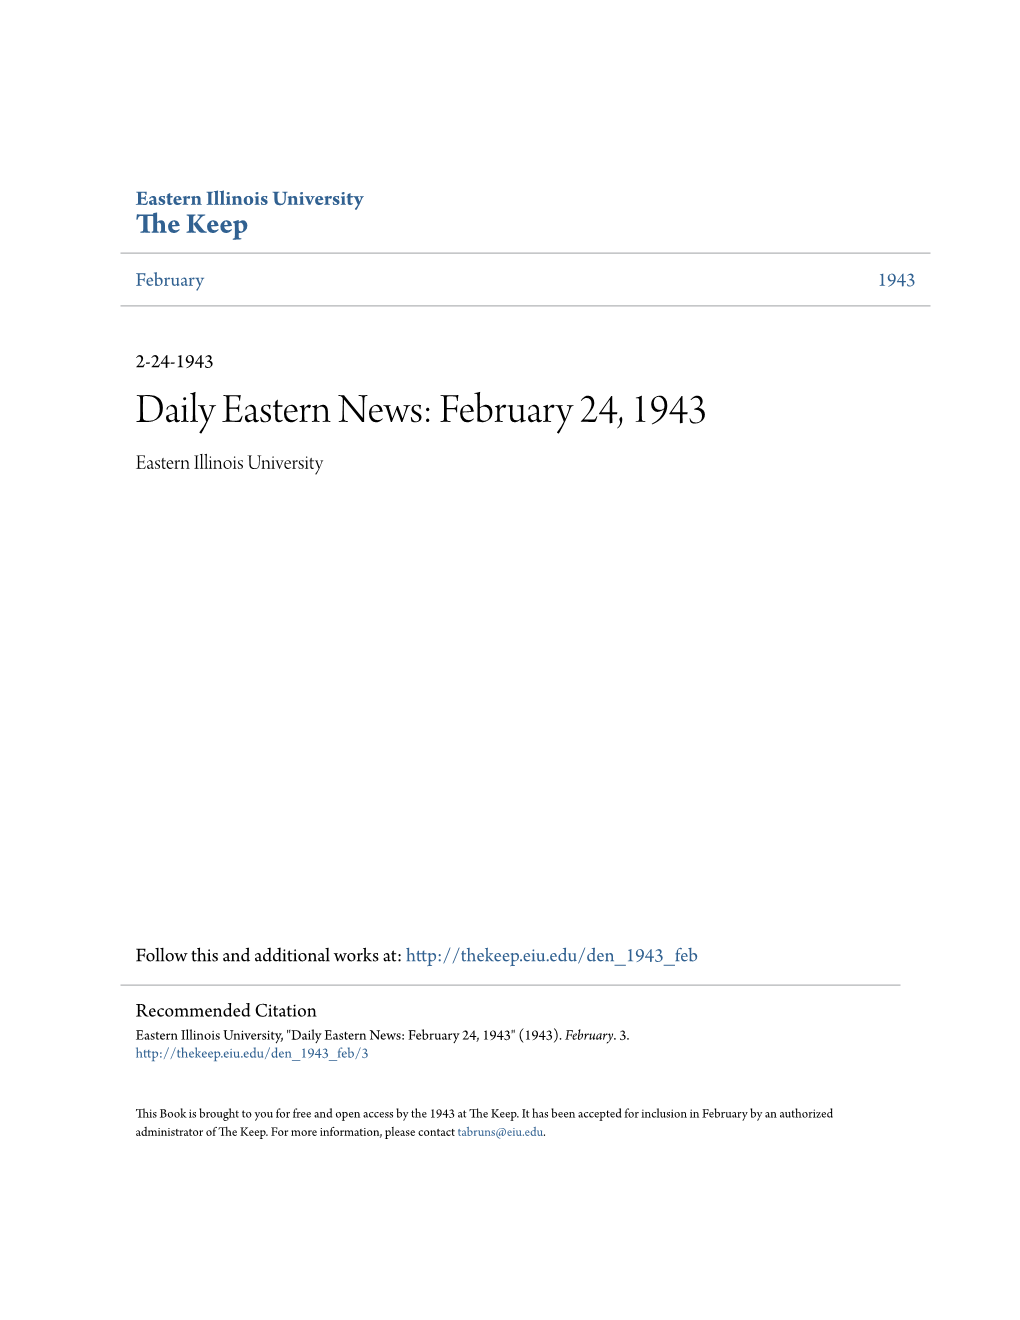 Daily Eastern News: February 24, 1943 Eastern Illinois University